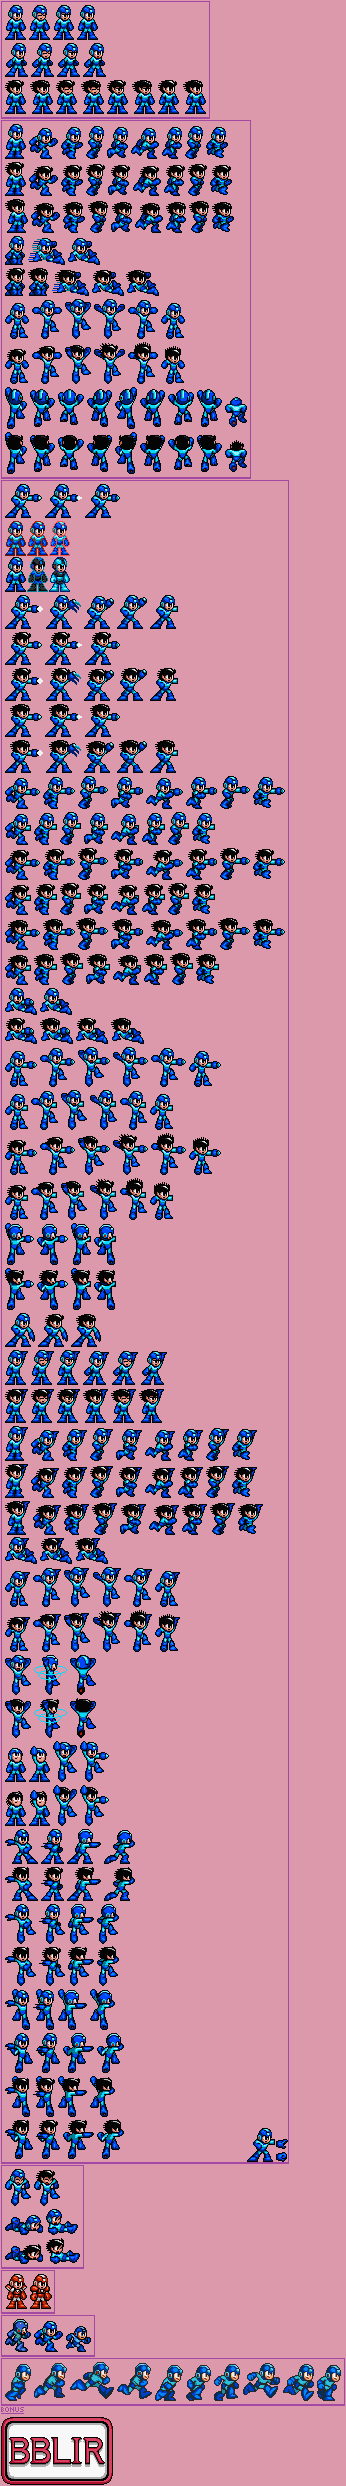 Mega Man Customs - Mega Man (Soccer-Style)